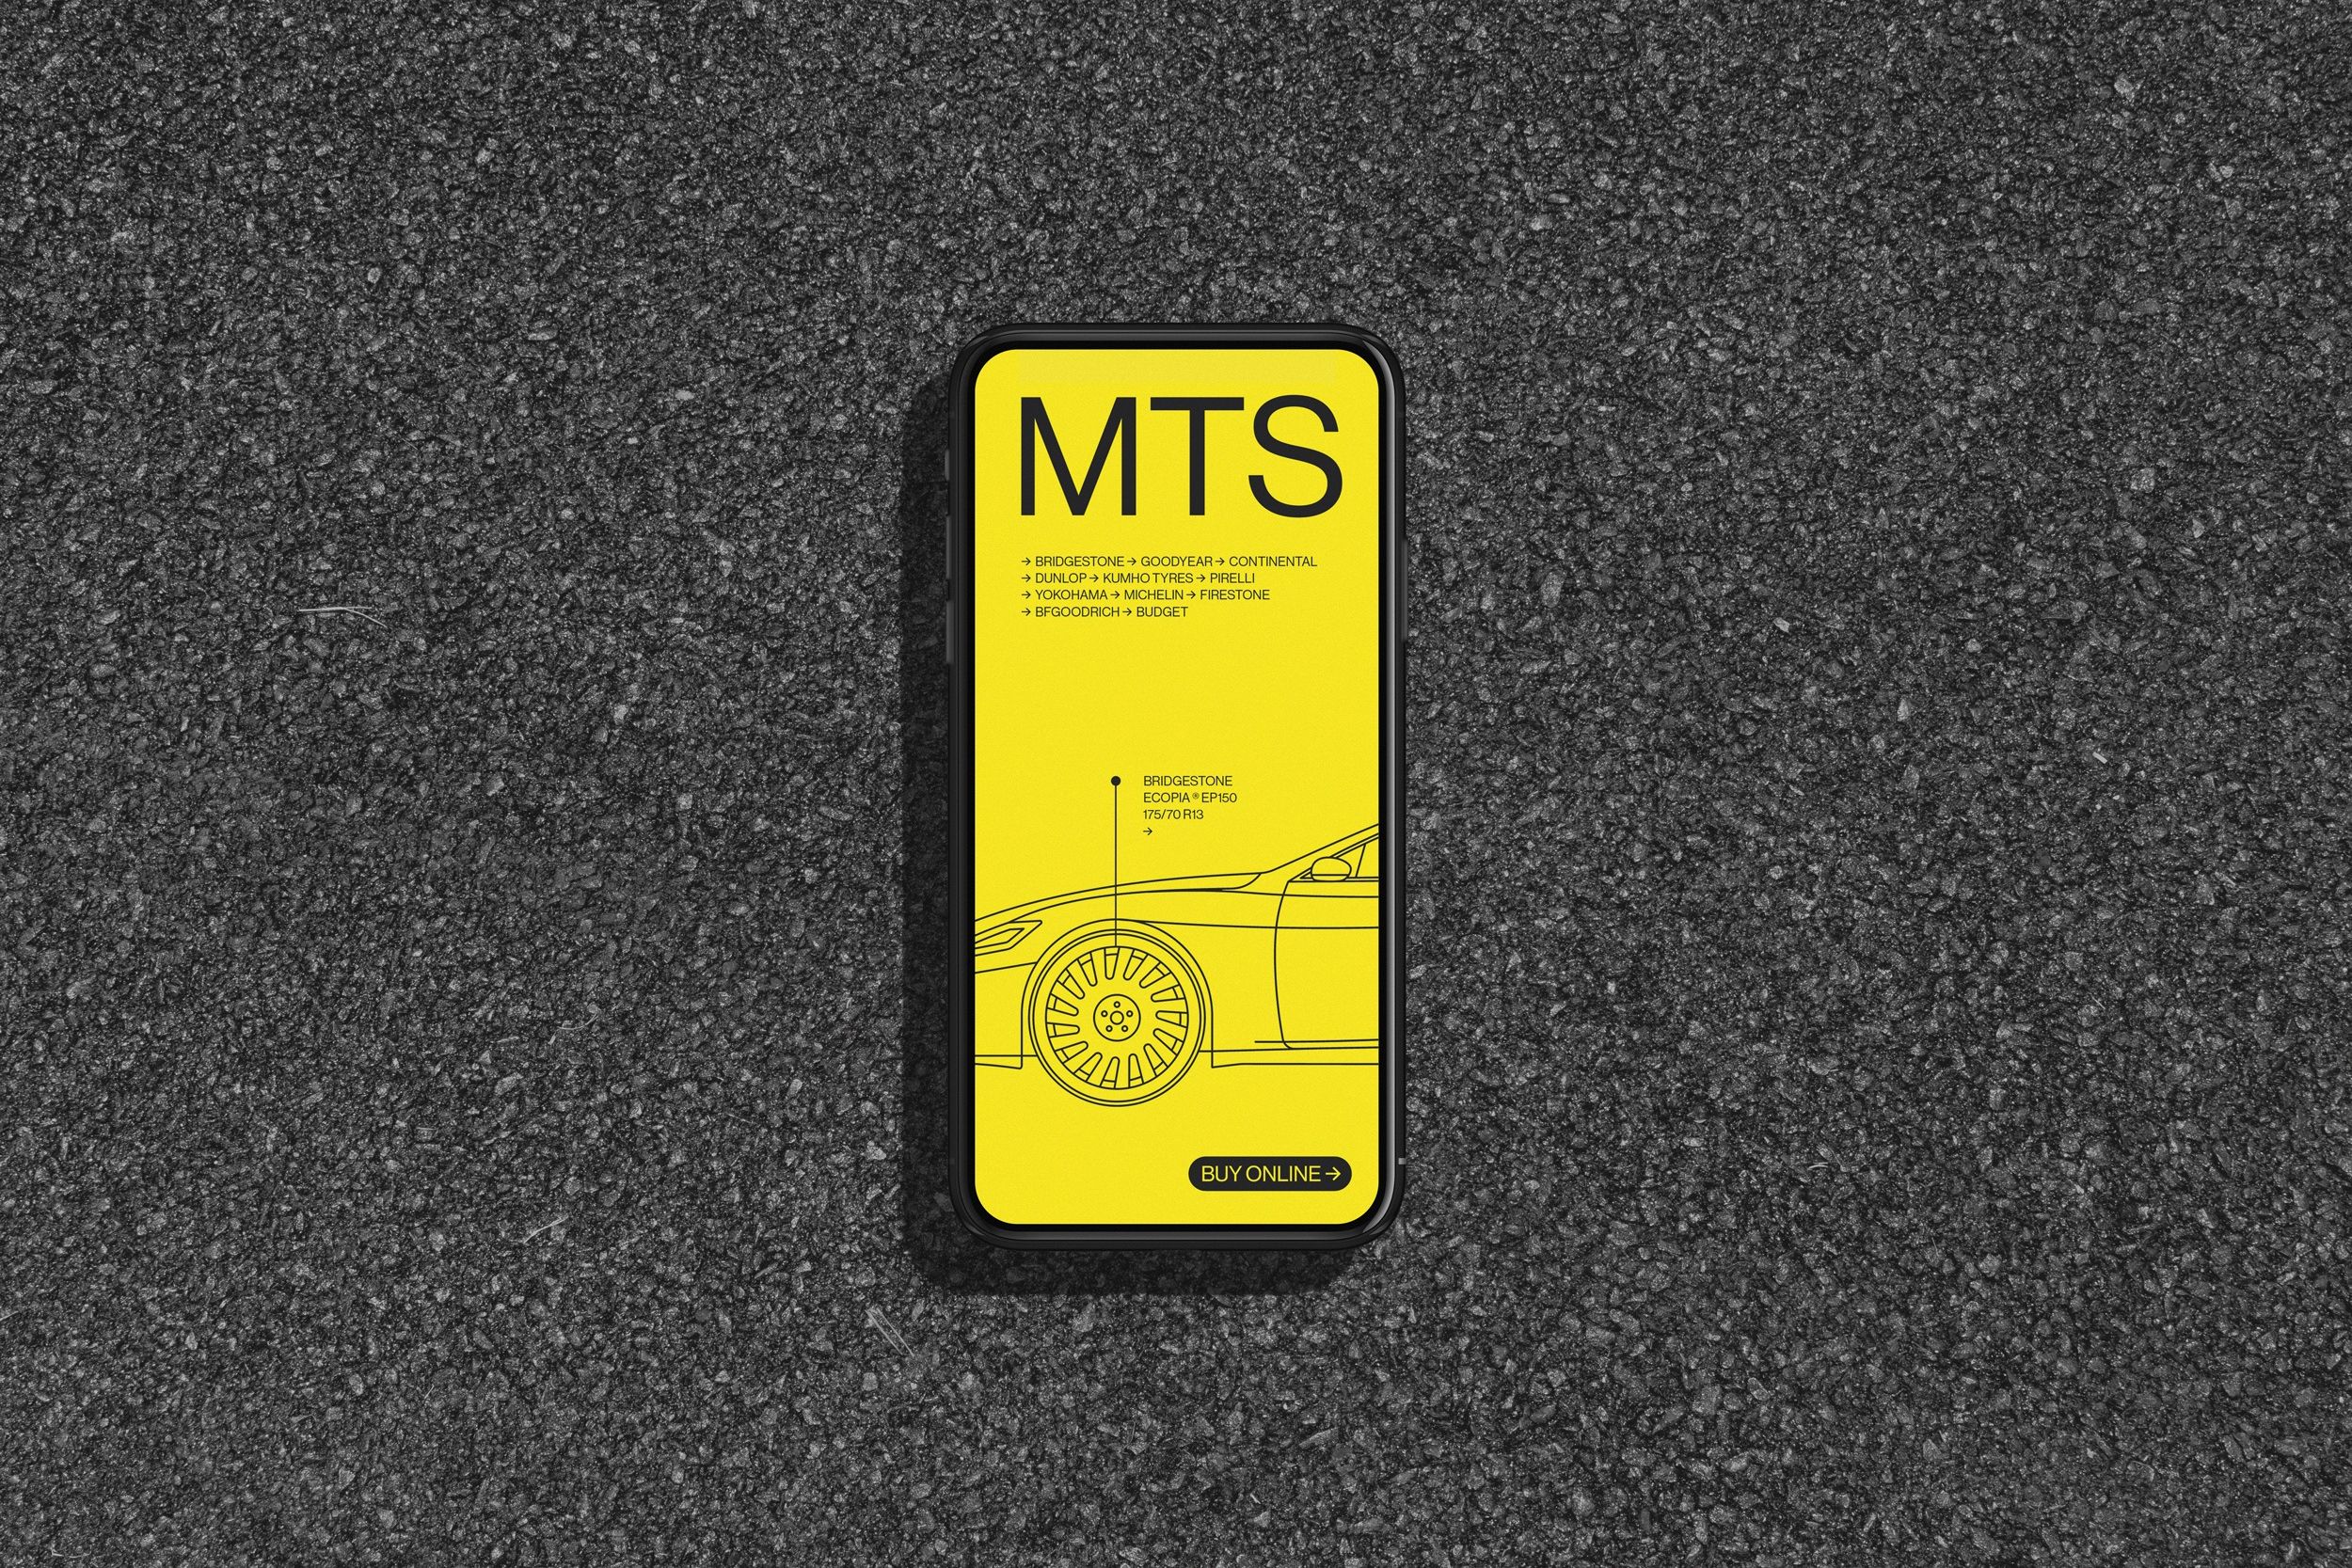 Mts phone